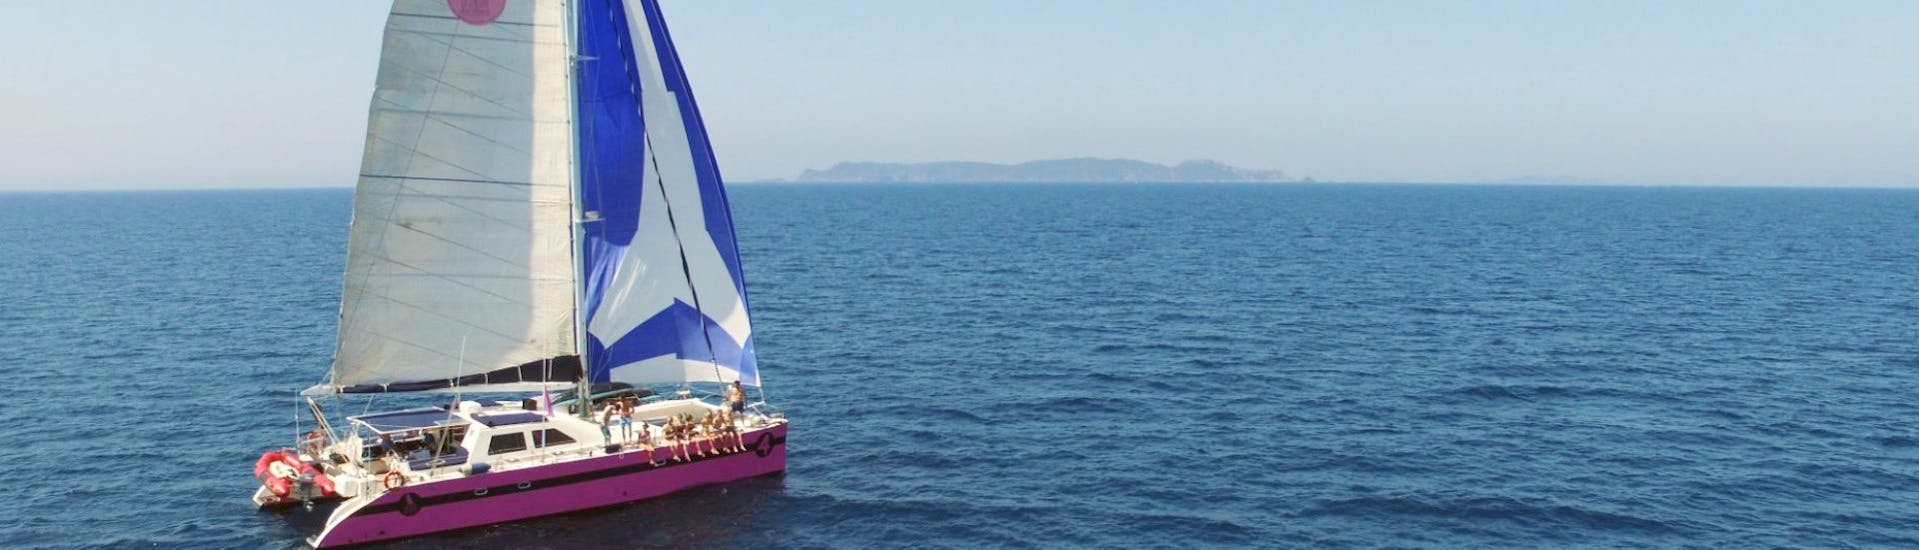 A family does a Sunset Catamaran Trip in the Bay of Quiberon with Caseneuve Maxi Catamaran.